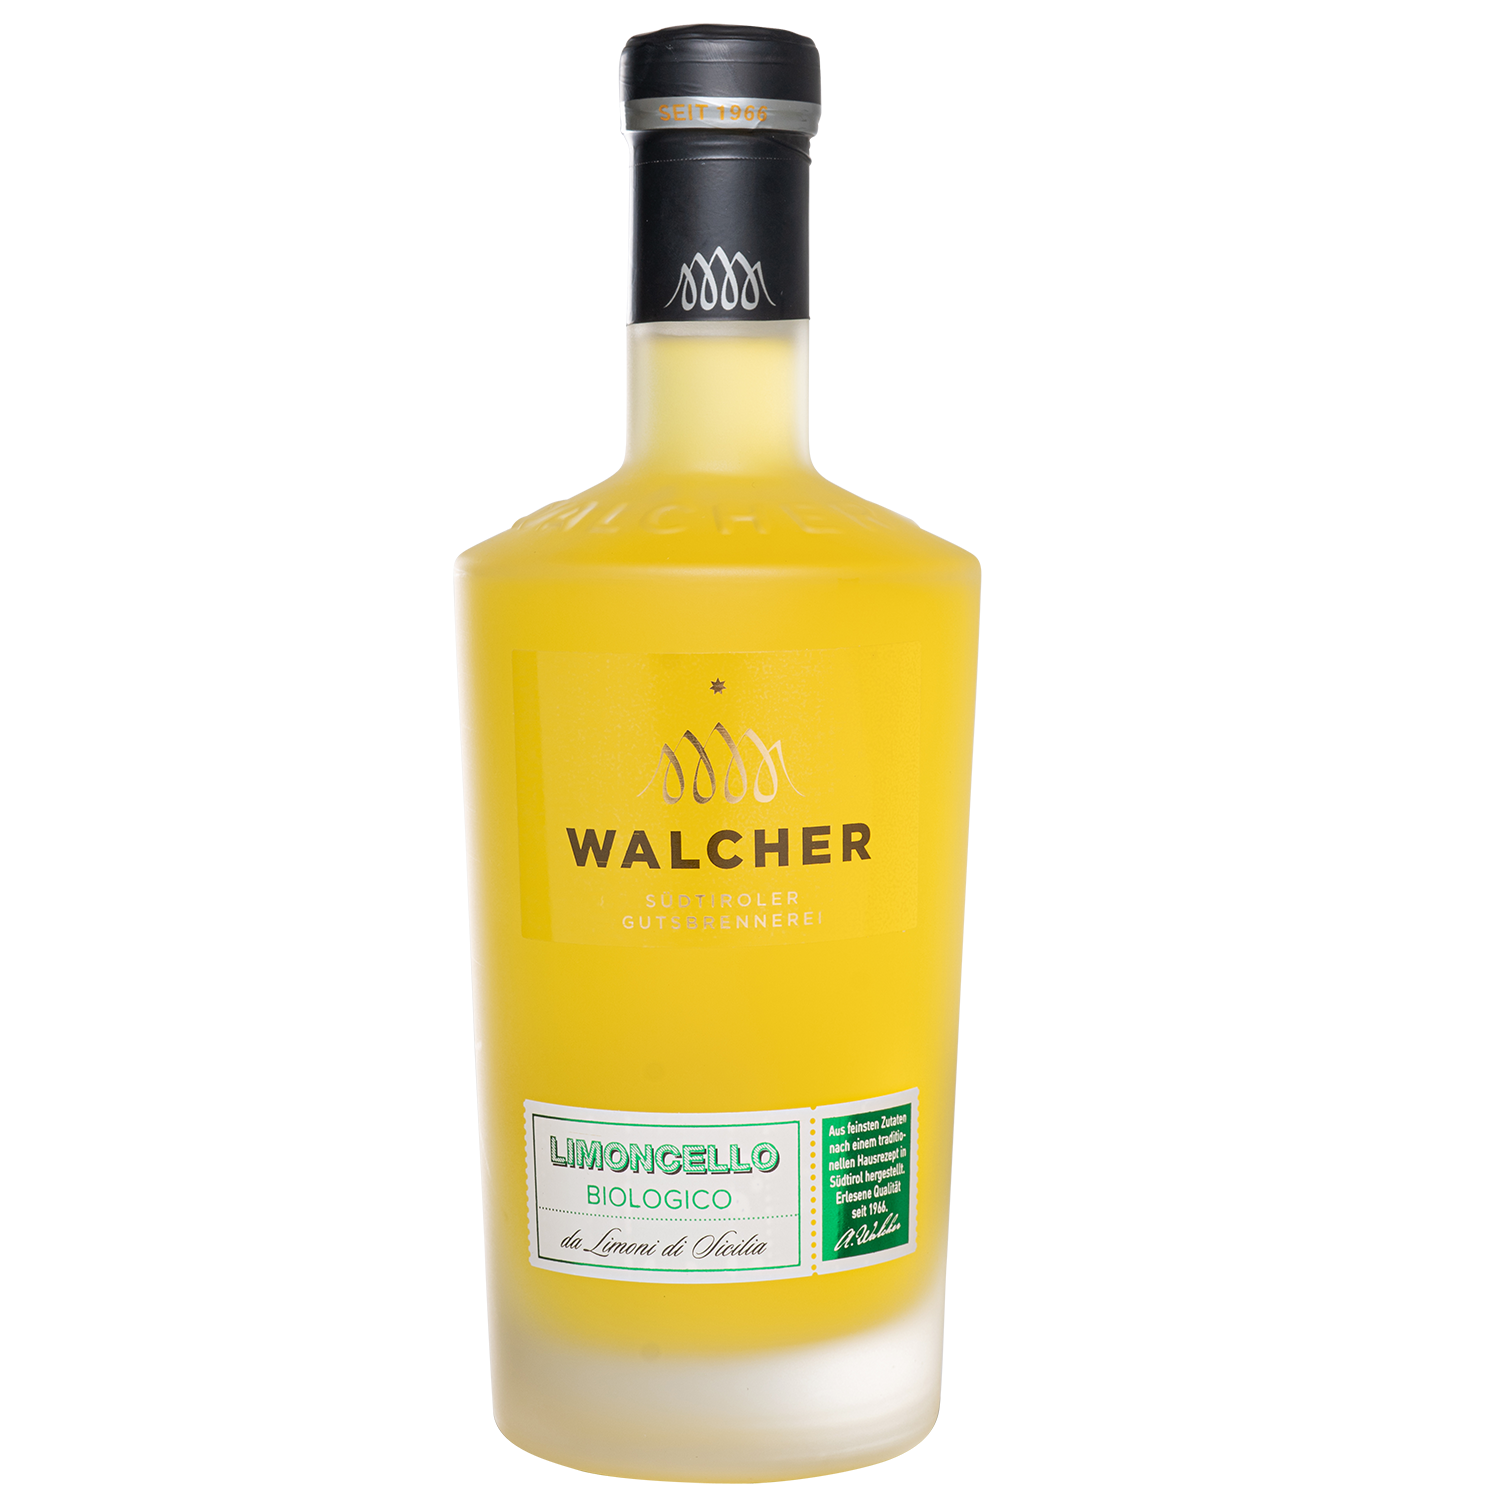 Bio Limoncello in 700ml bottle by Walcher